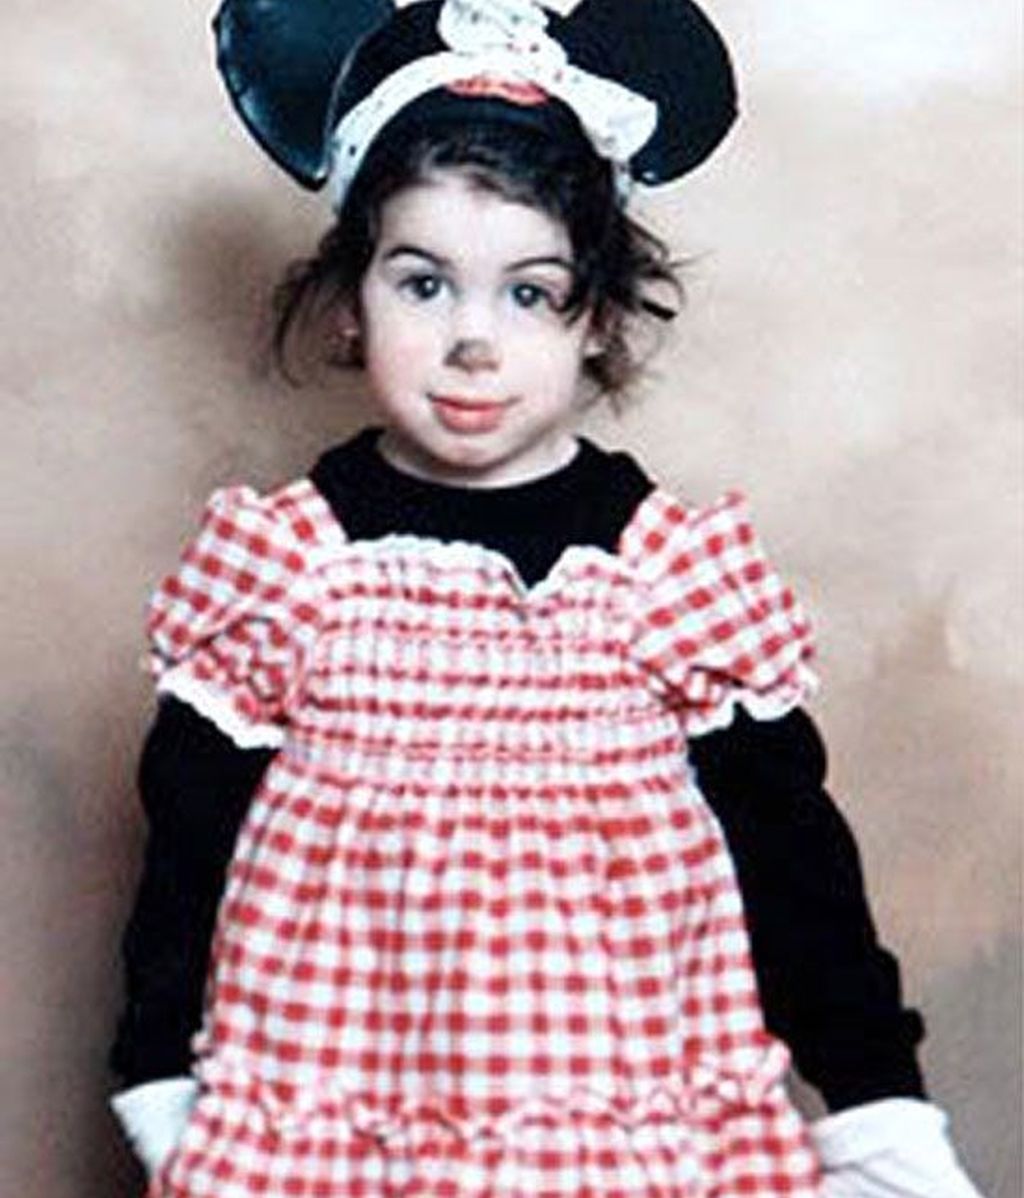 La infancia de Amy Winehouse